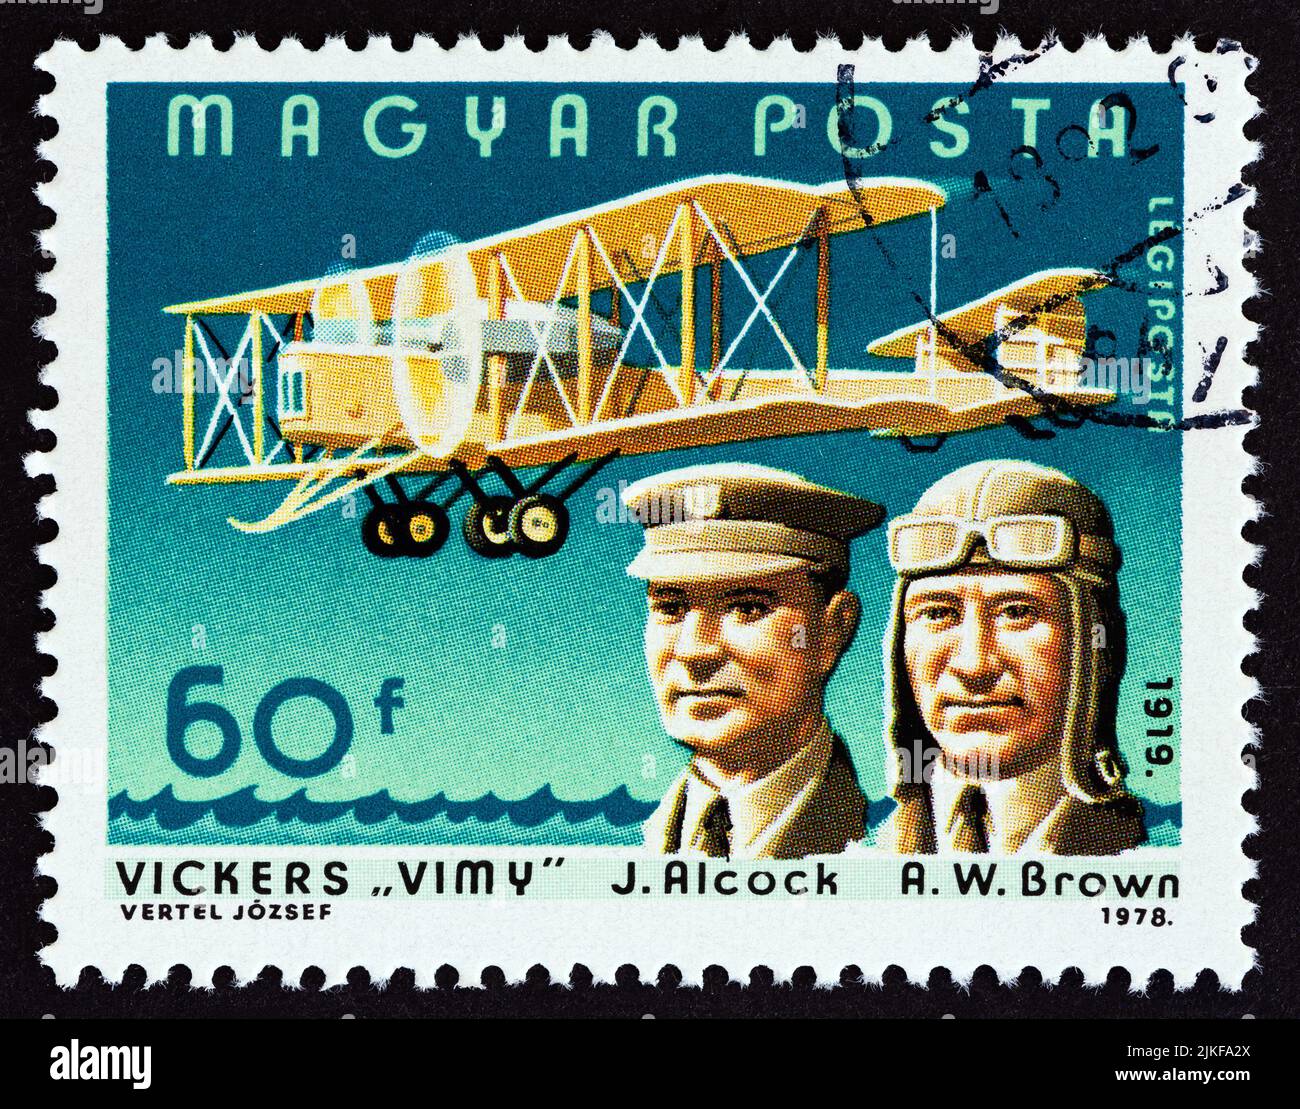 HUNGARY - CIRCA 1978: A stamp printed in Hungary shows John Alcock and Arthur Whitten Brown, first non-stop transatlantic flight, 1919, circa 1978. Stock Photo